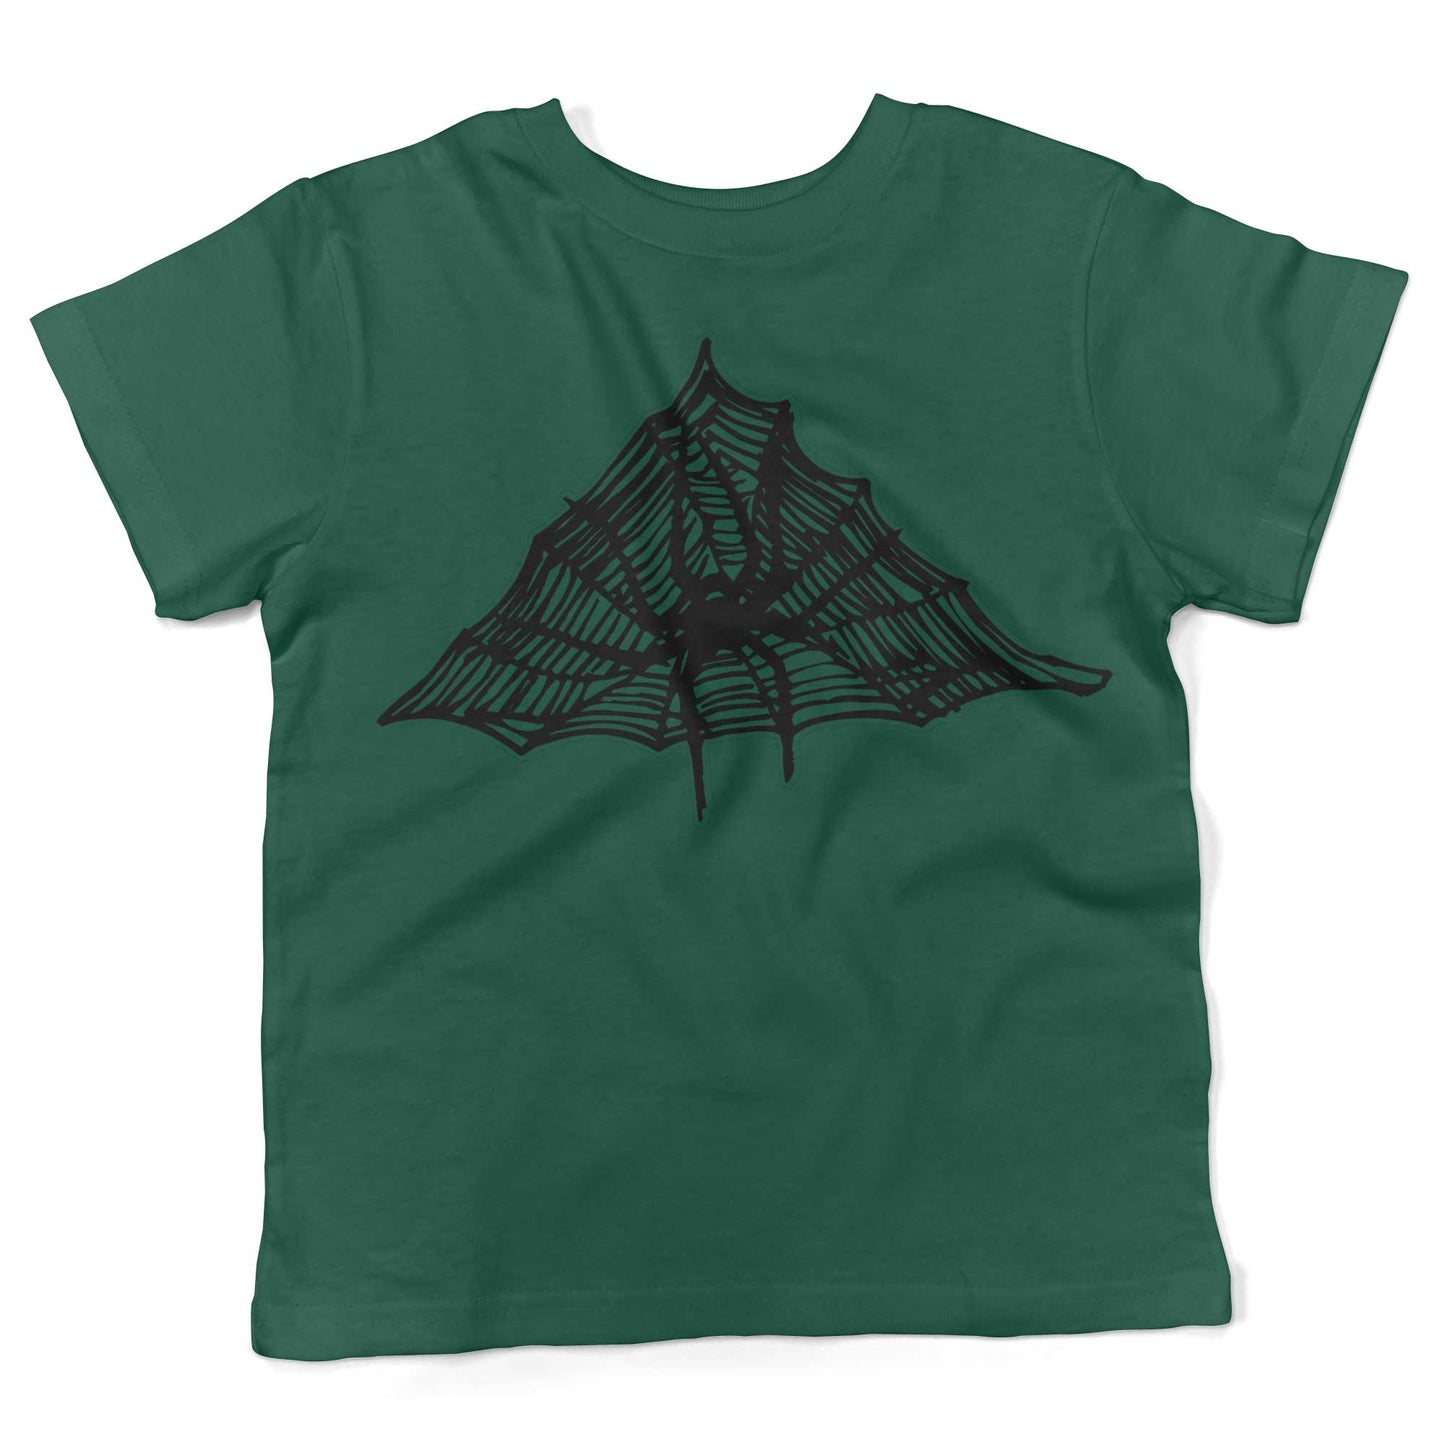 Spiderweb Toddler Shirt-Kelly Green-2T